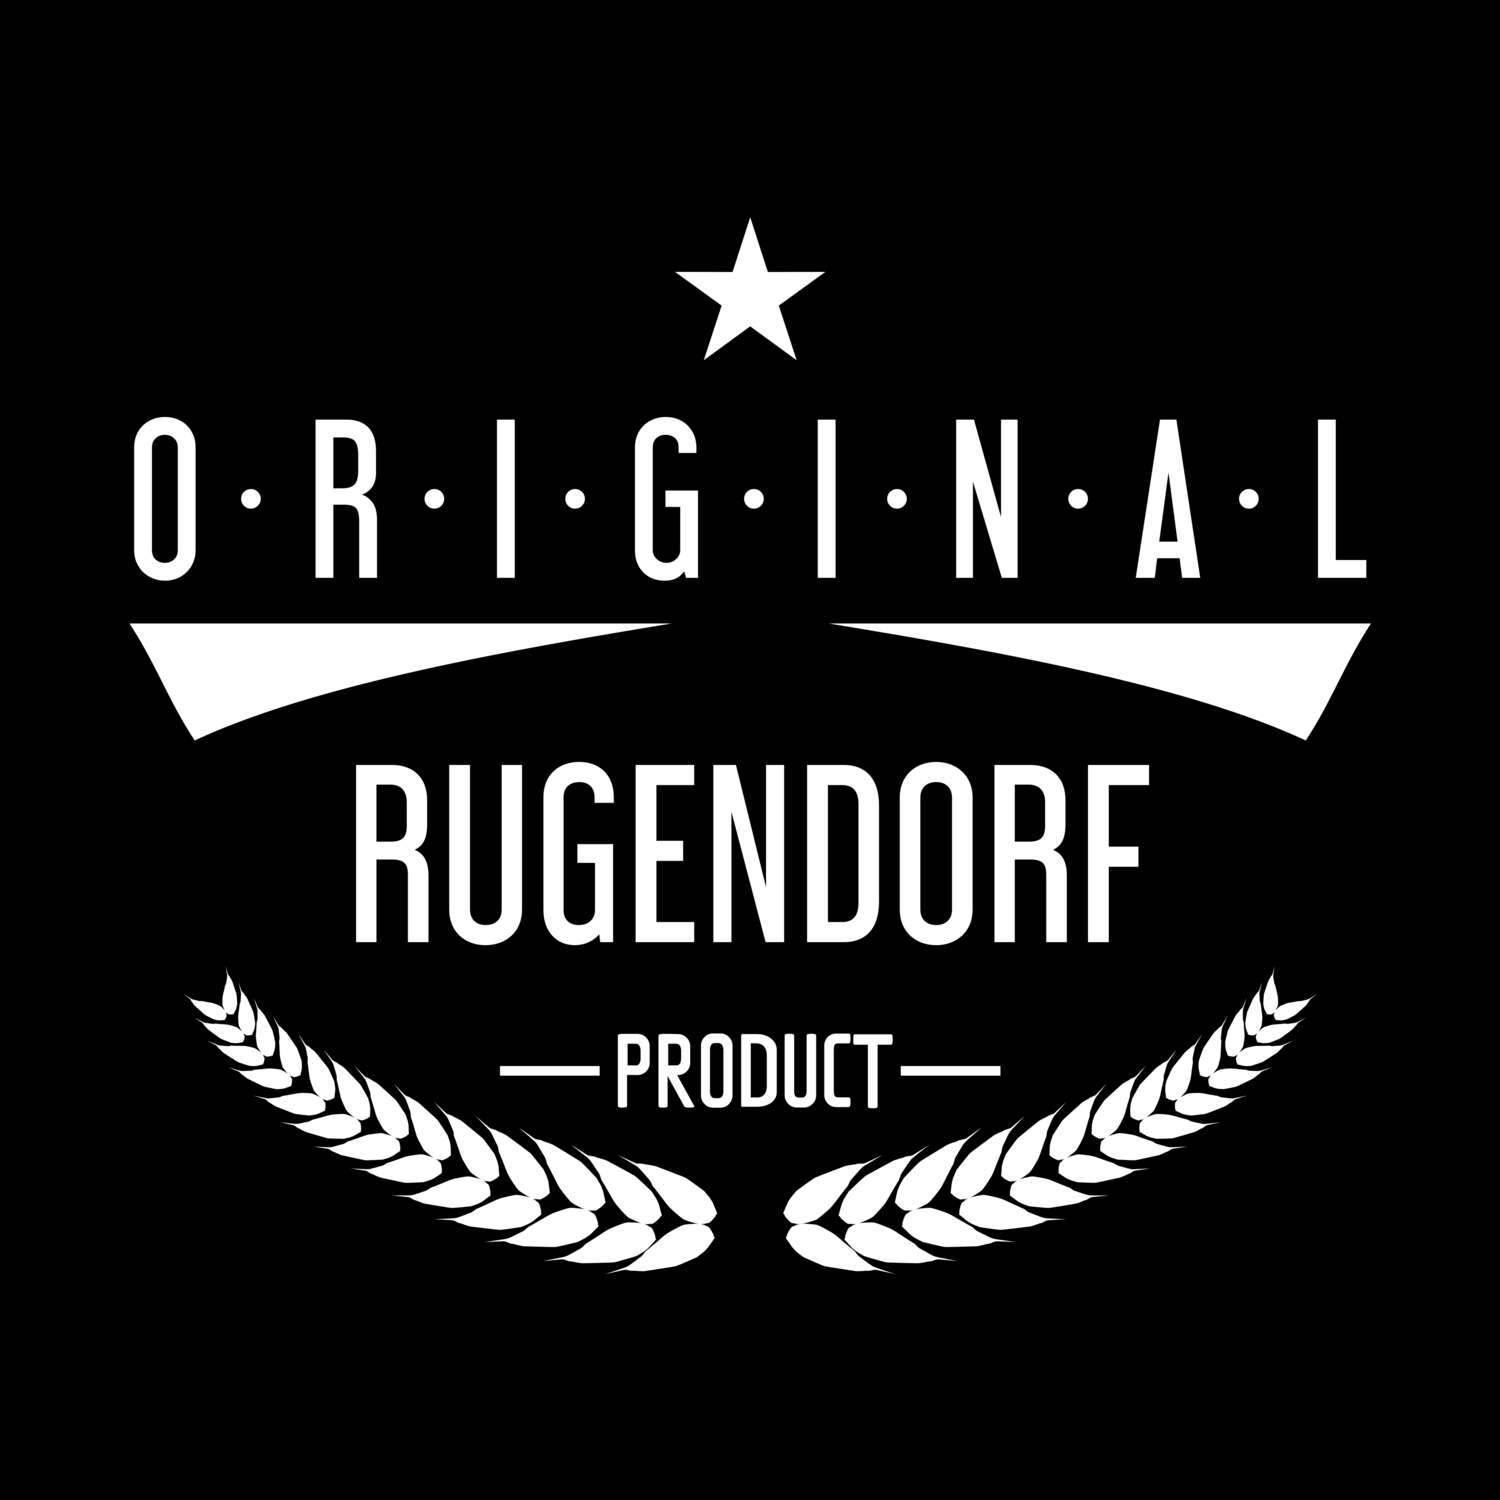 Rugendorf T-Shirt »Original Product«